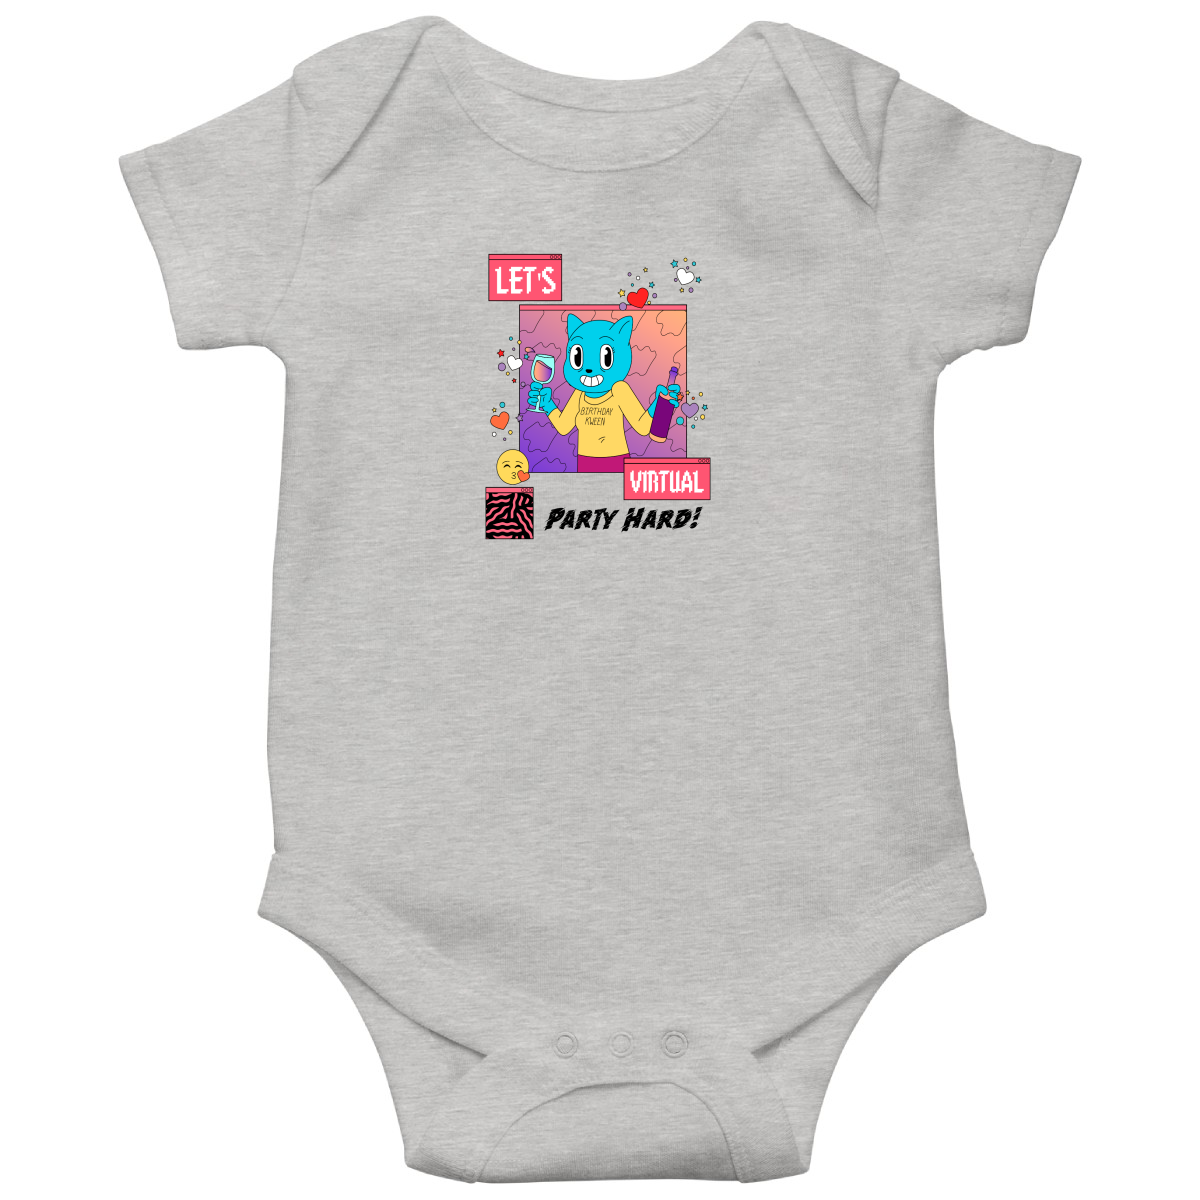 Happy Birthday Let's Virtual Party Baby Bodysuits | Gray